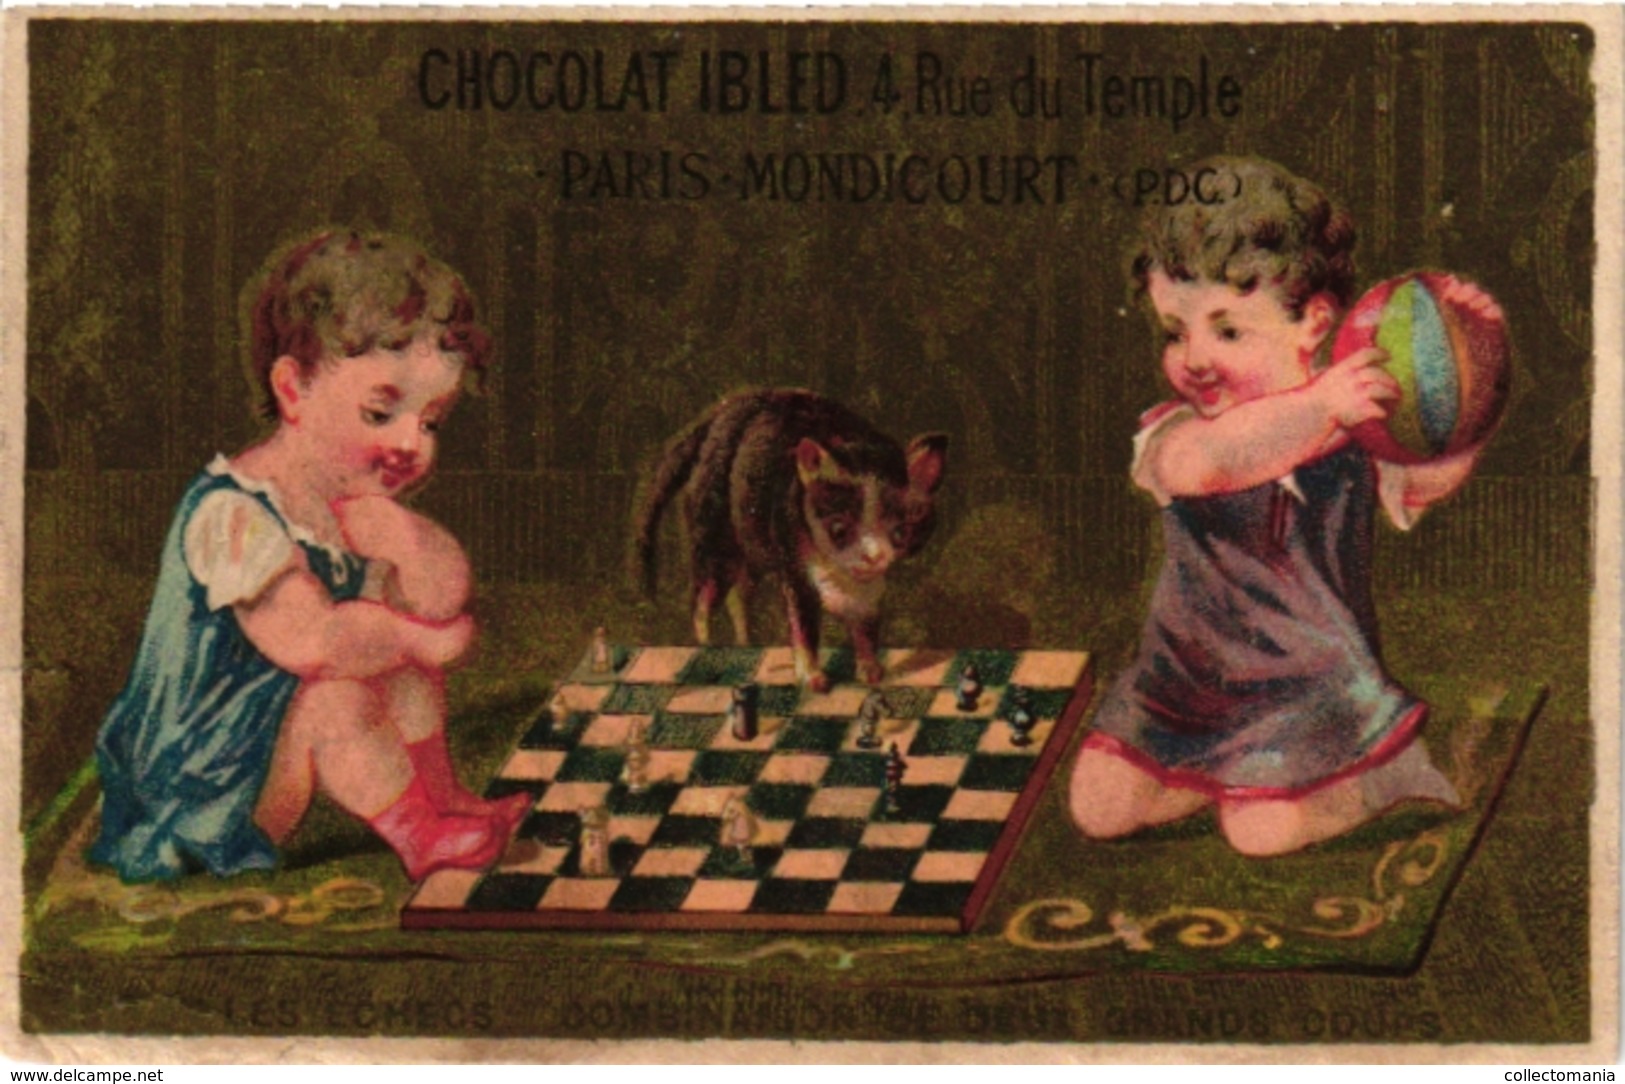 1 Trade Cards Chromo CHESS ECHEC SCHACH  Pub Chocolat  IBLED Mondicourt - Scacchi